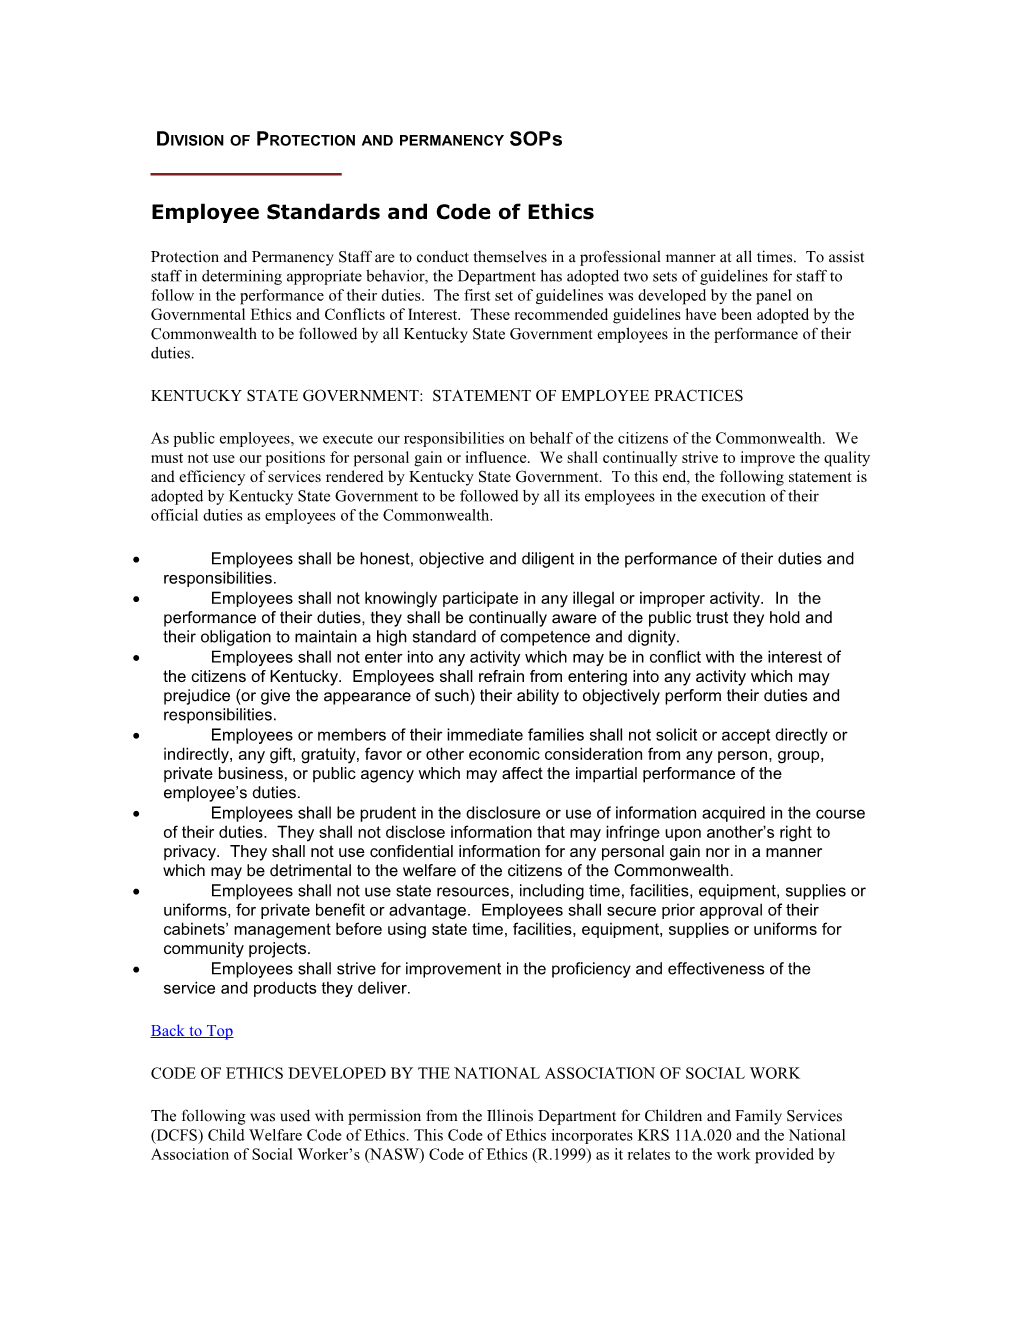 Employee Standards and Code of Ethics